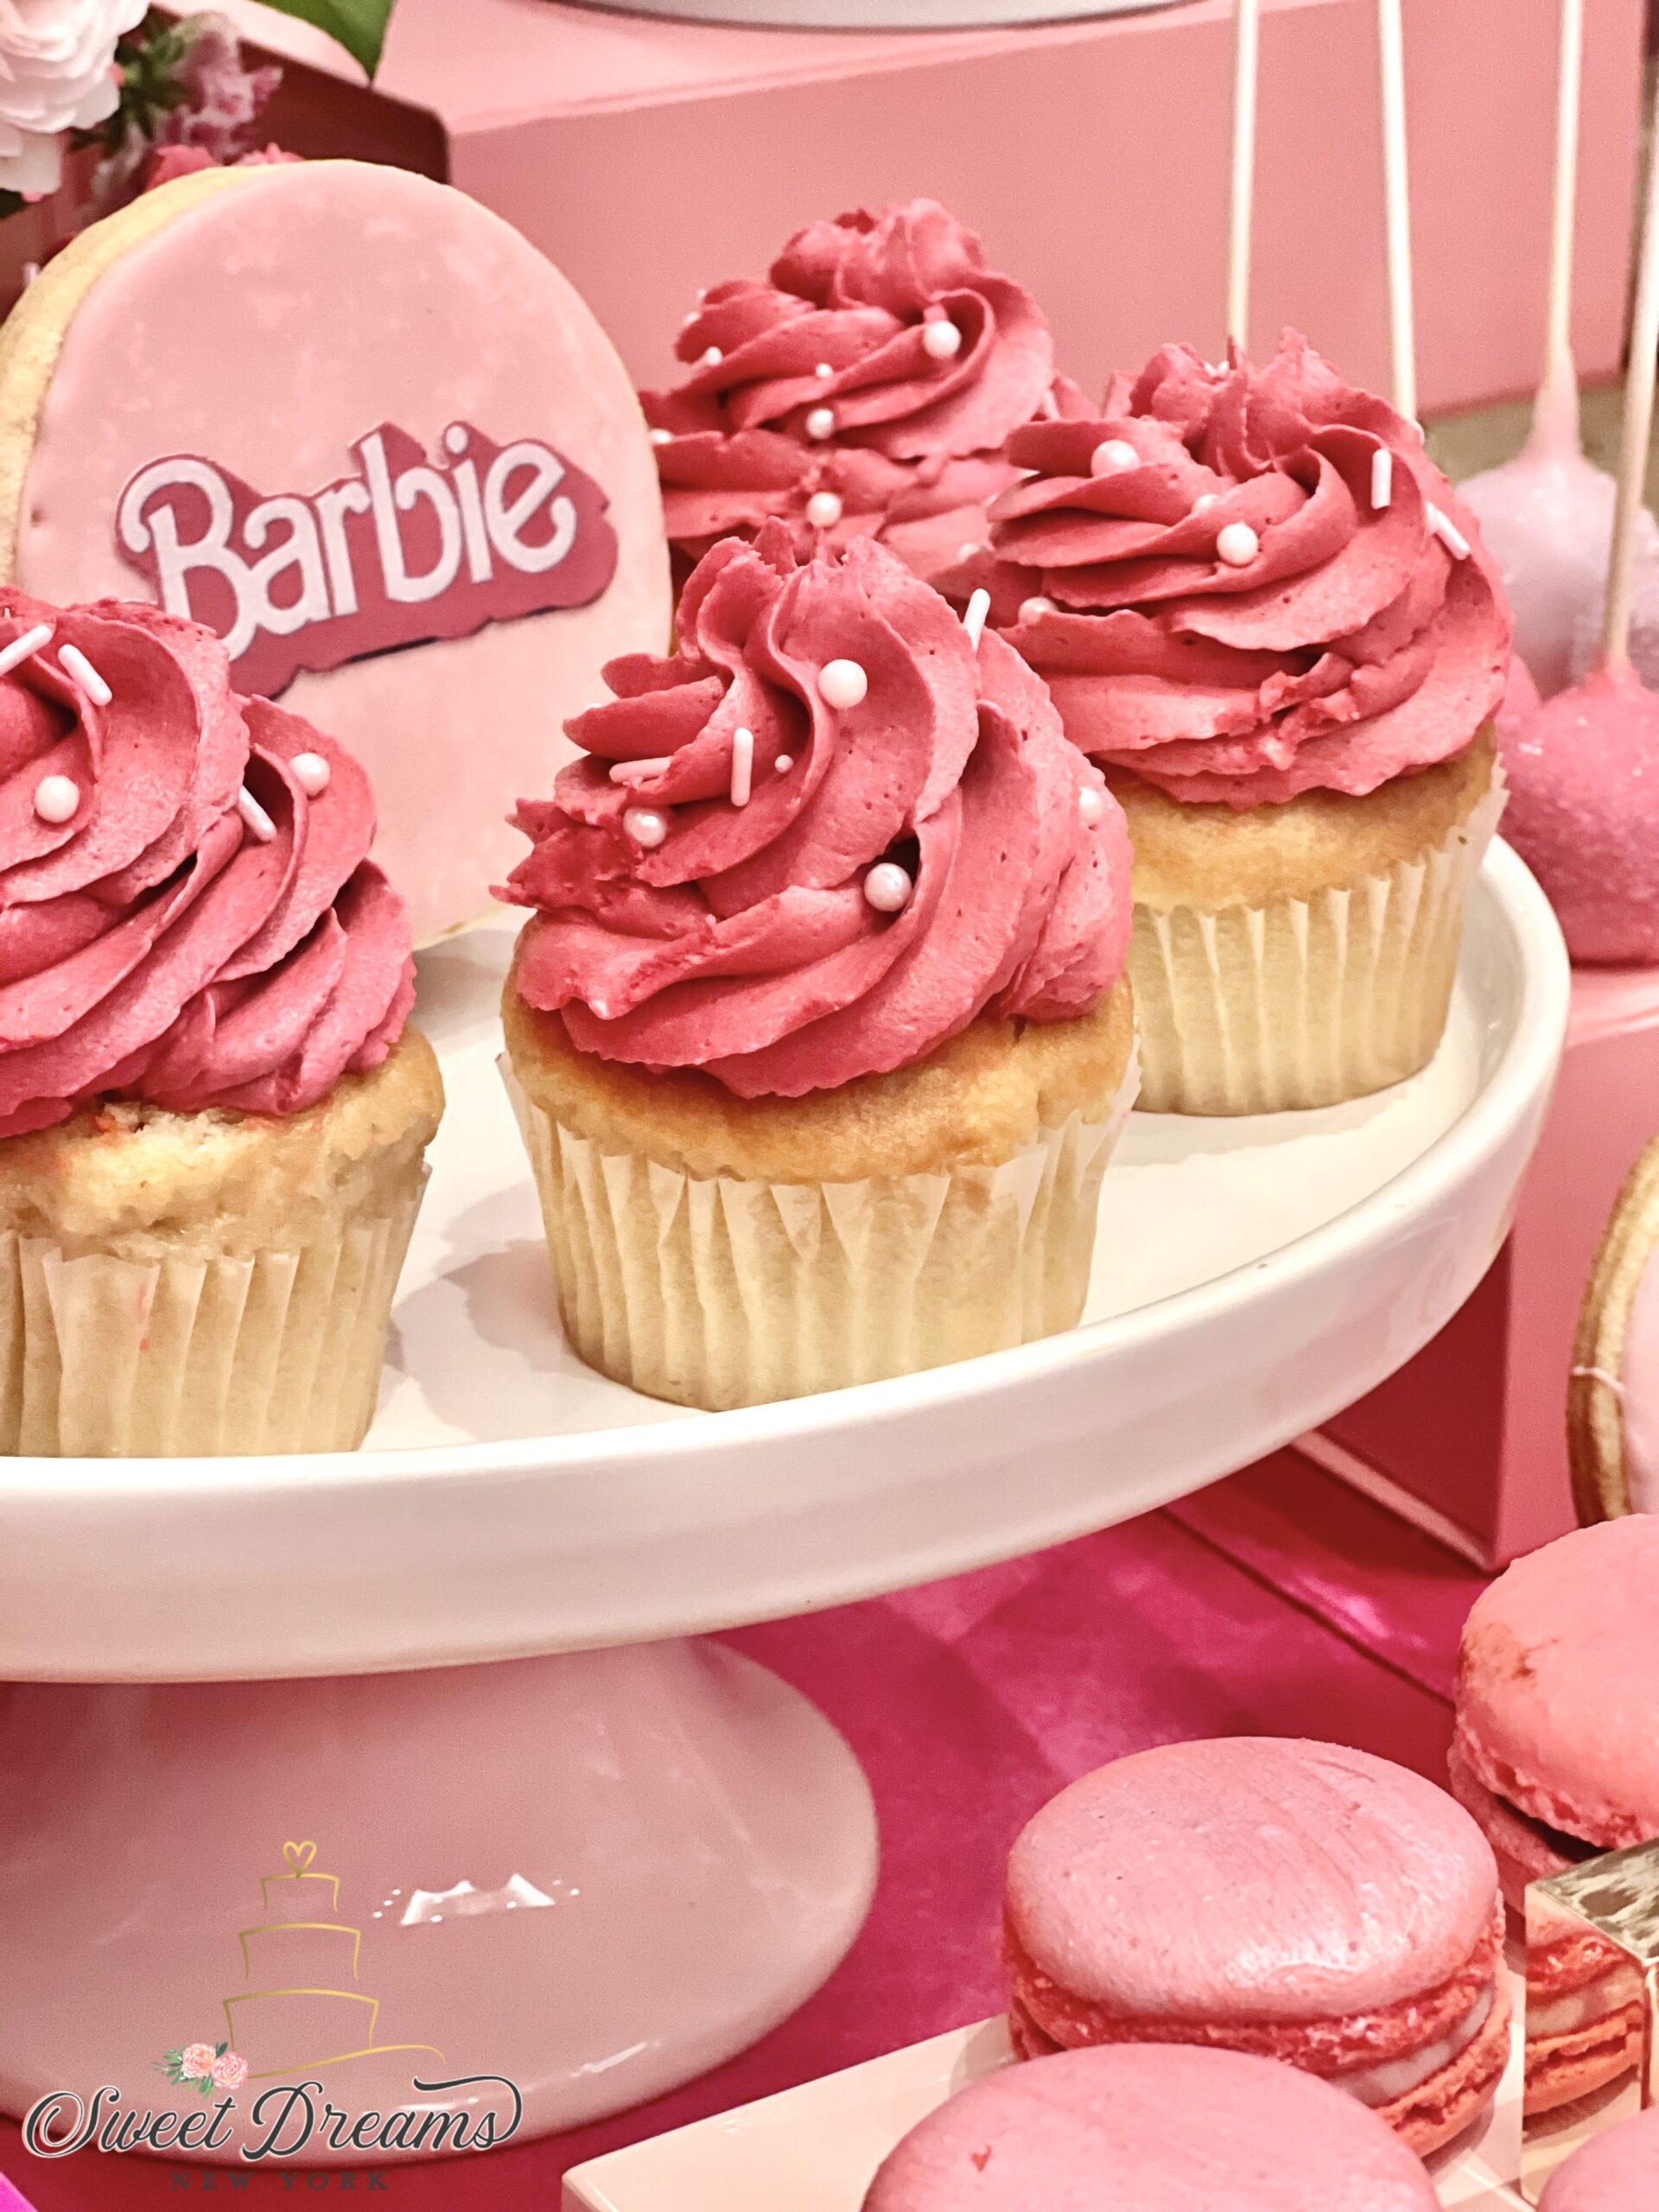 Barbie The Movie Dessert Table NYC Premiere Pink Cupcakes Long Island Barbie birthday Bridal Shower pink